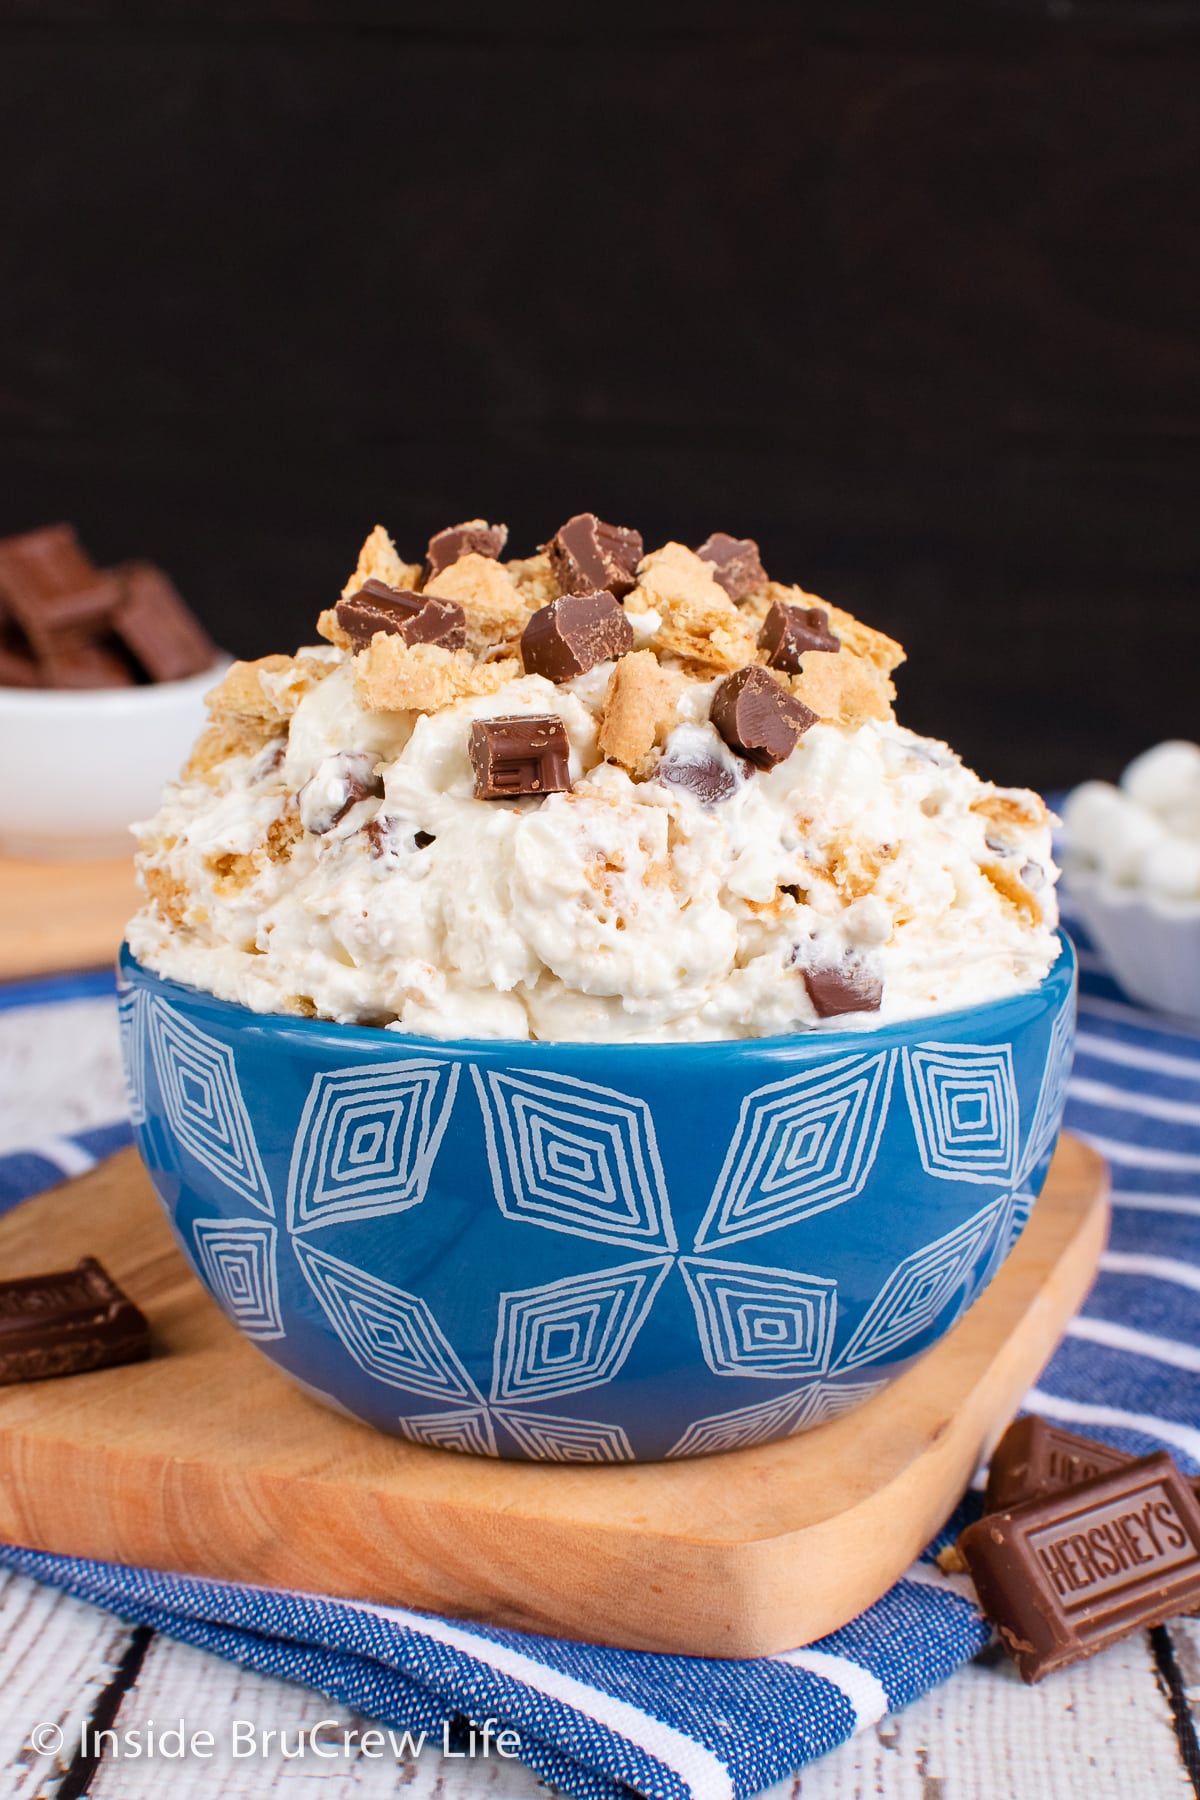 A blue bowl filled with a marshmallow fluff dessert.